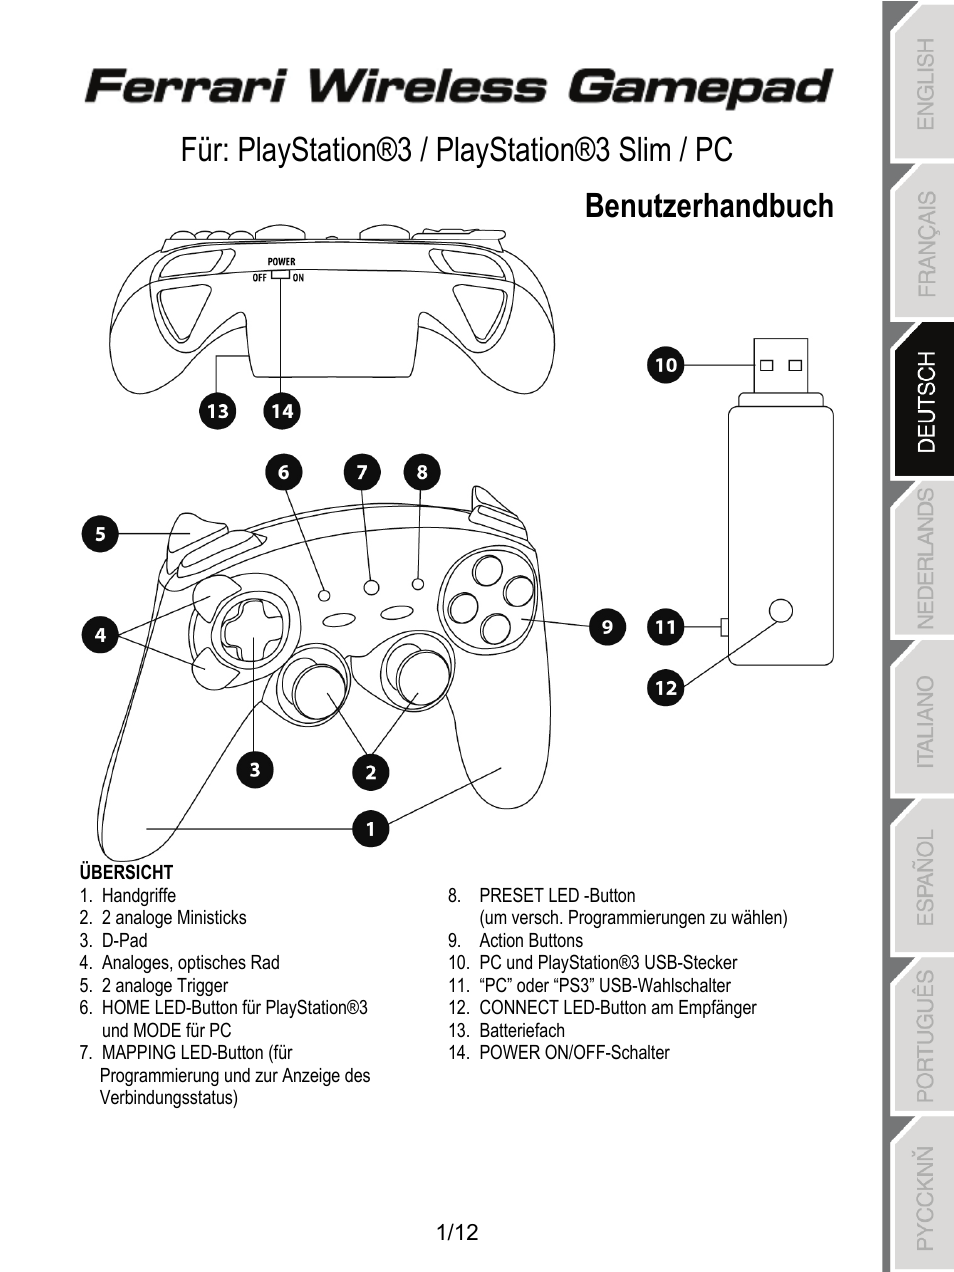 03_deu_ferrari_wireless_gamepad_5076063 | Thrustmaster F1 Alonso Wireless  Gamepad User Manual | Page 26 / 146 | Original mode